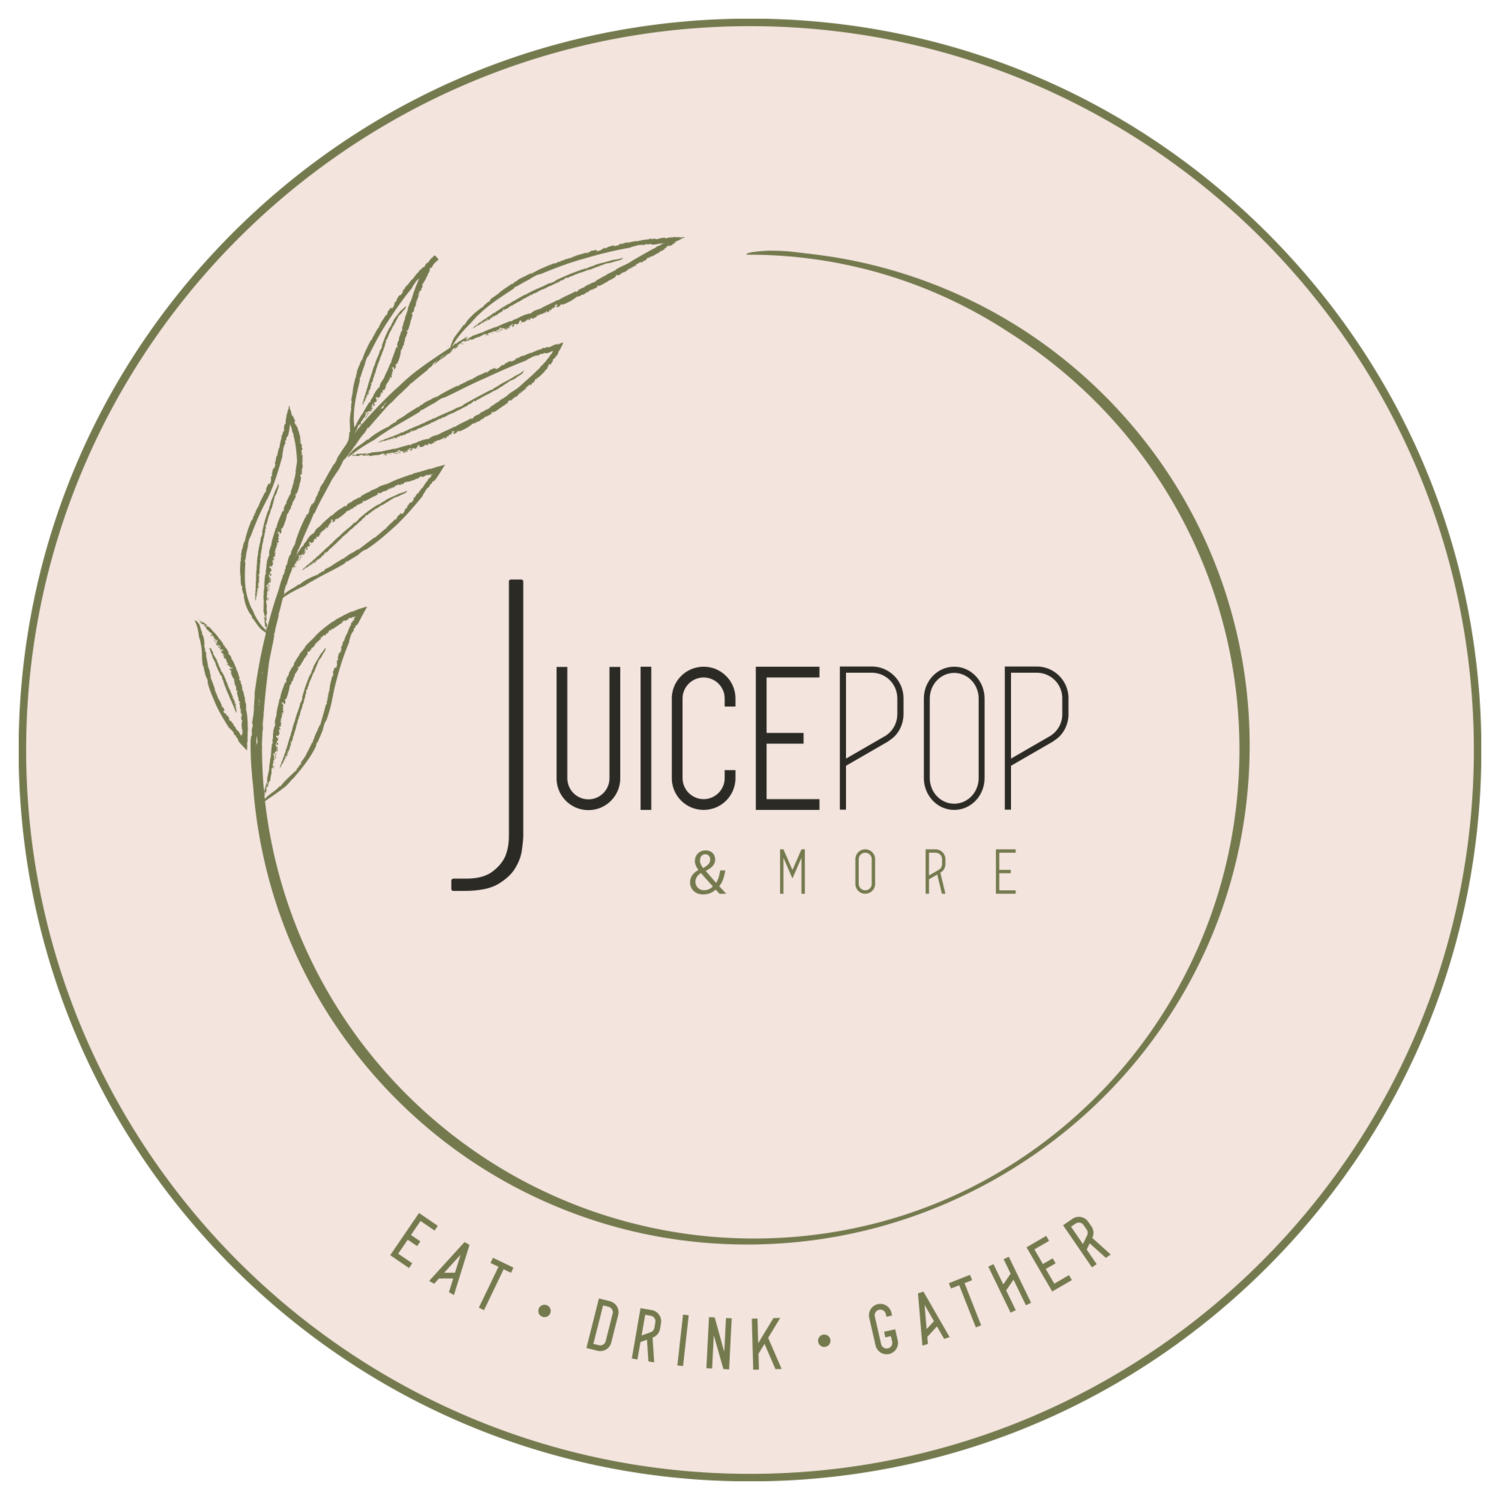 The JuicePop &amp; more